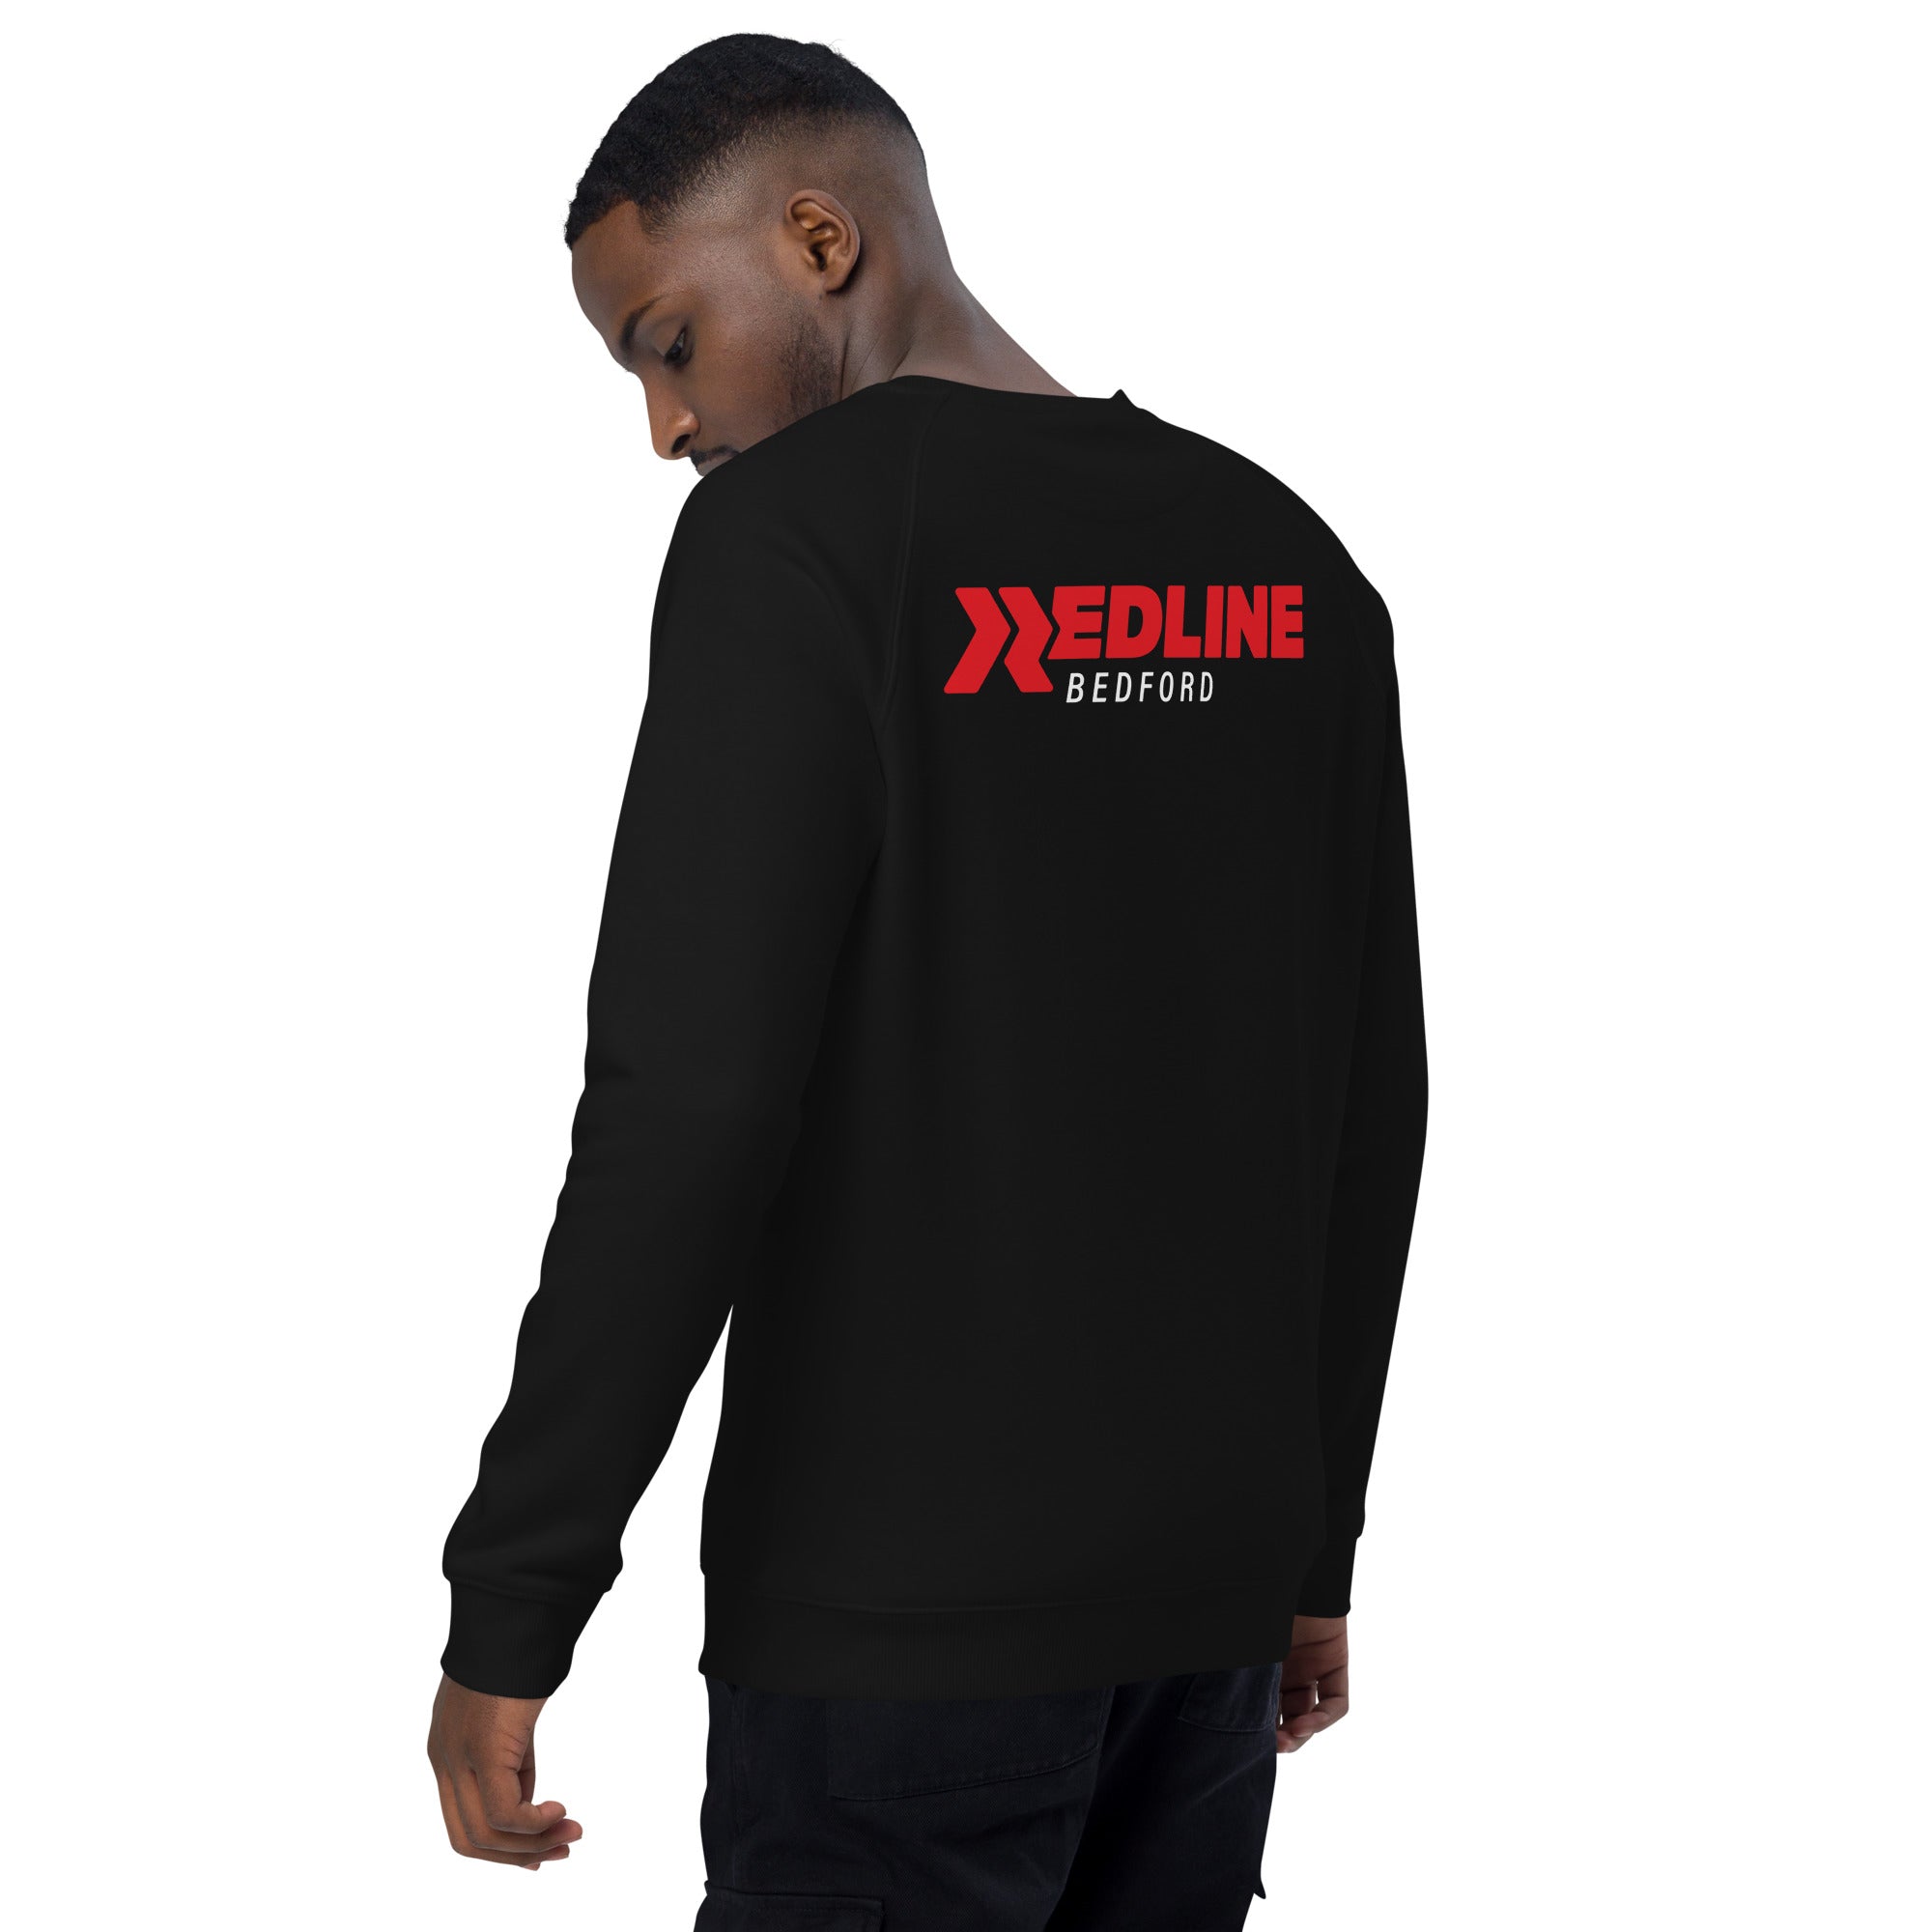 Bedford Logo Red - Back R/W - Black Unisex organic raglan sweatshirt